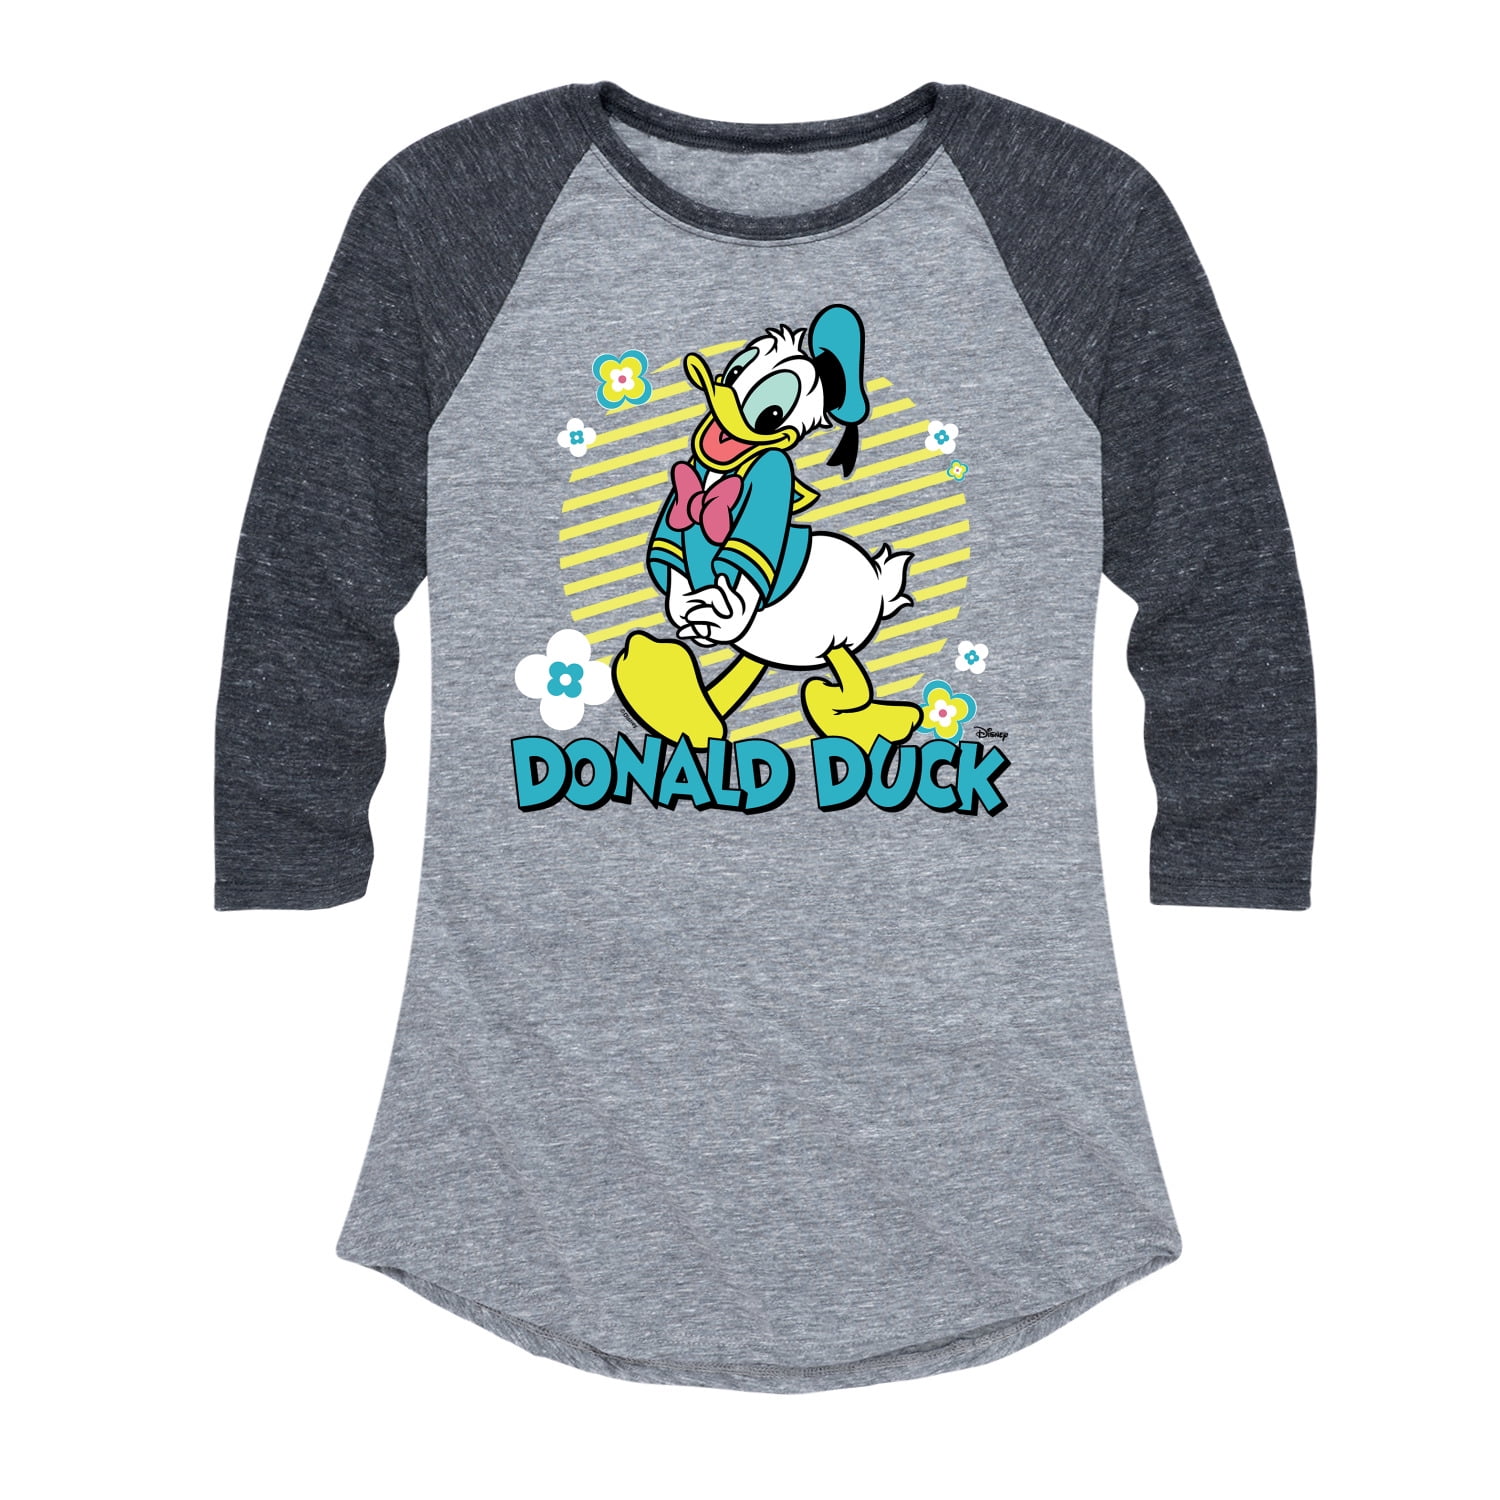 Disney - Donald Duck - Women's Raglan Graphic T-Shirt